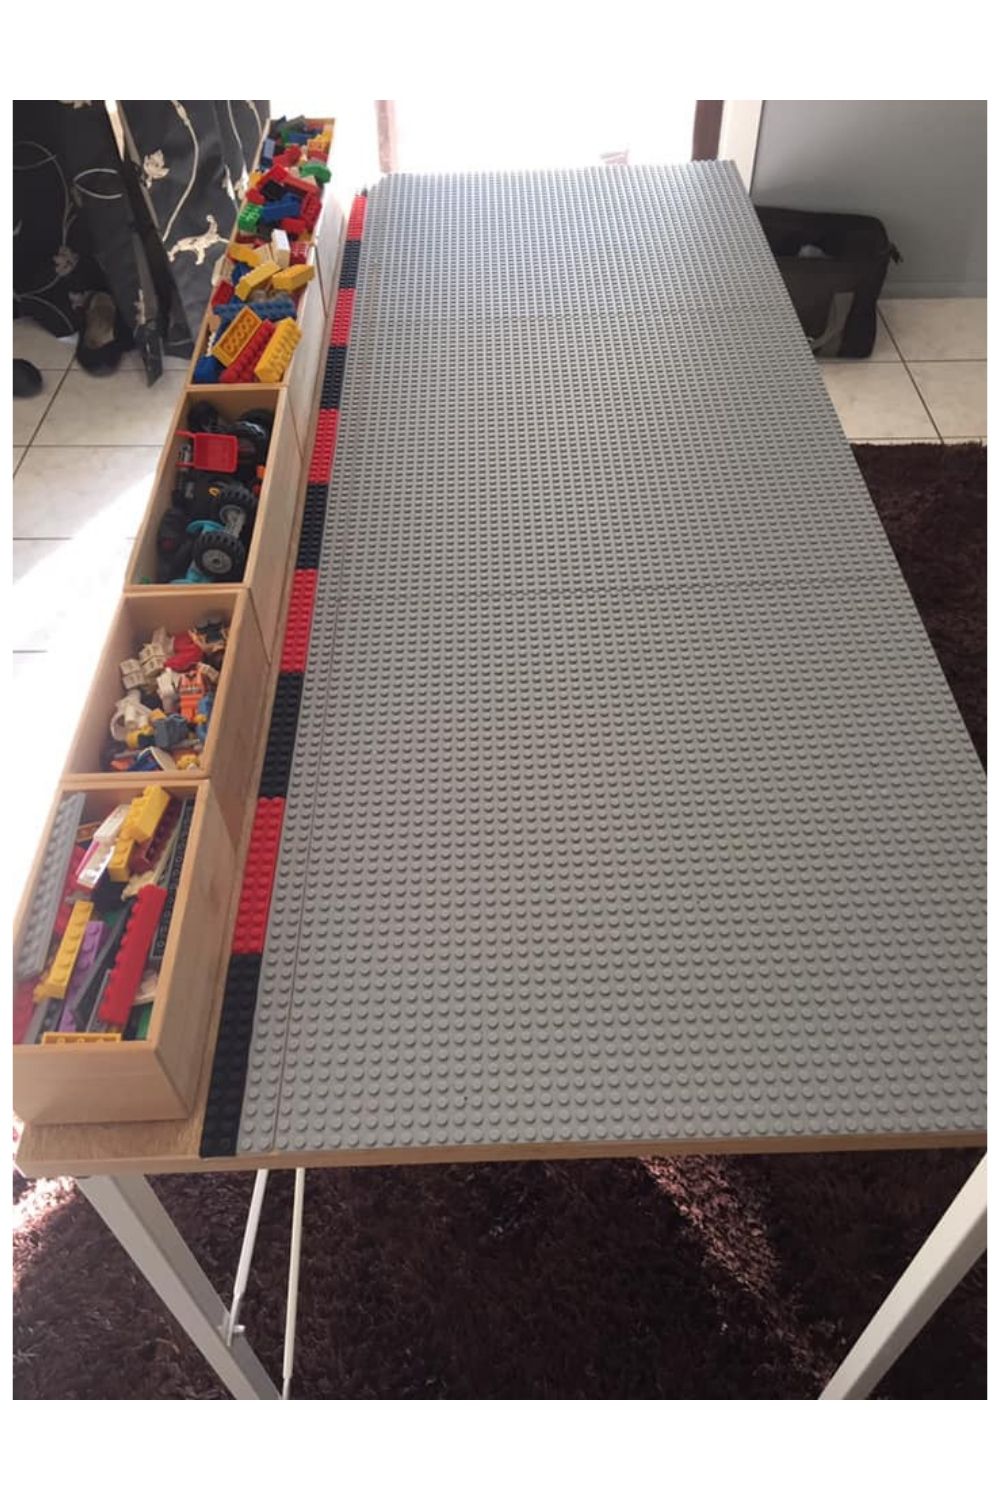 kmart construction block table